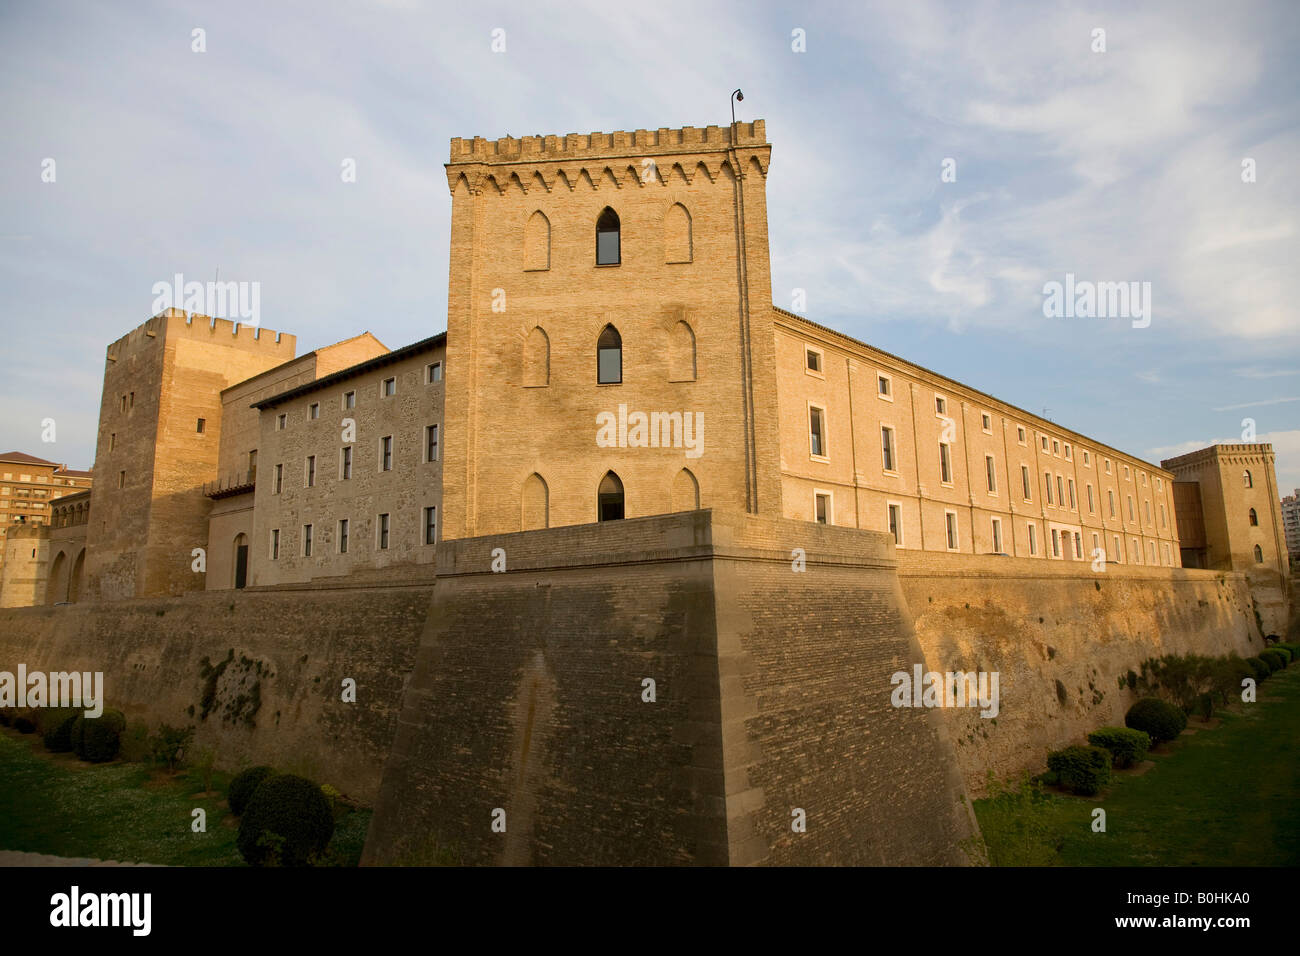 Palacio de Aljaferia palace, external wall, Moorish architecture, Zaragoza, Saragossa, Aragon, Spain Stock Photo